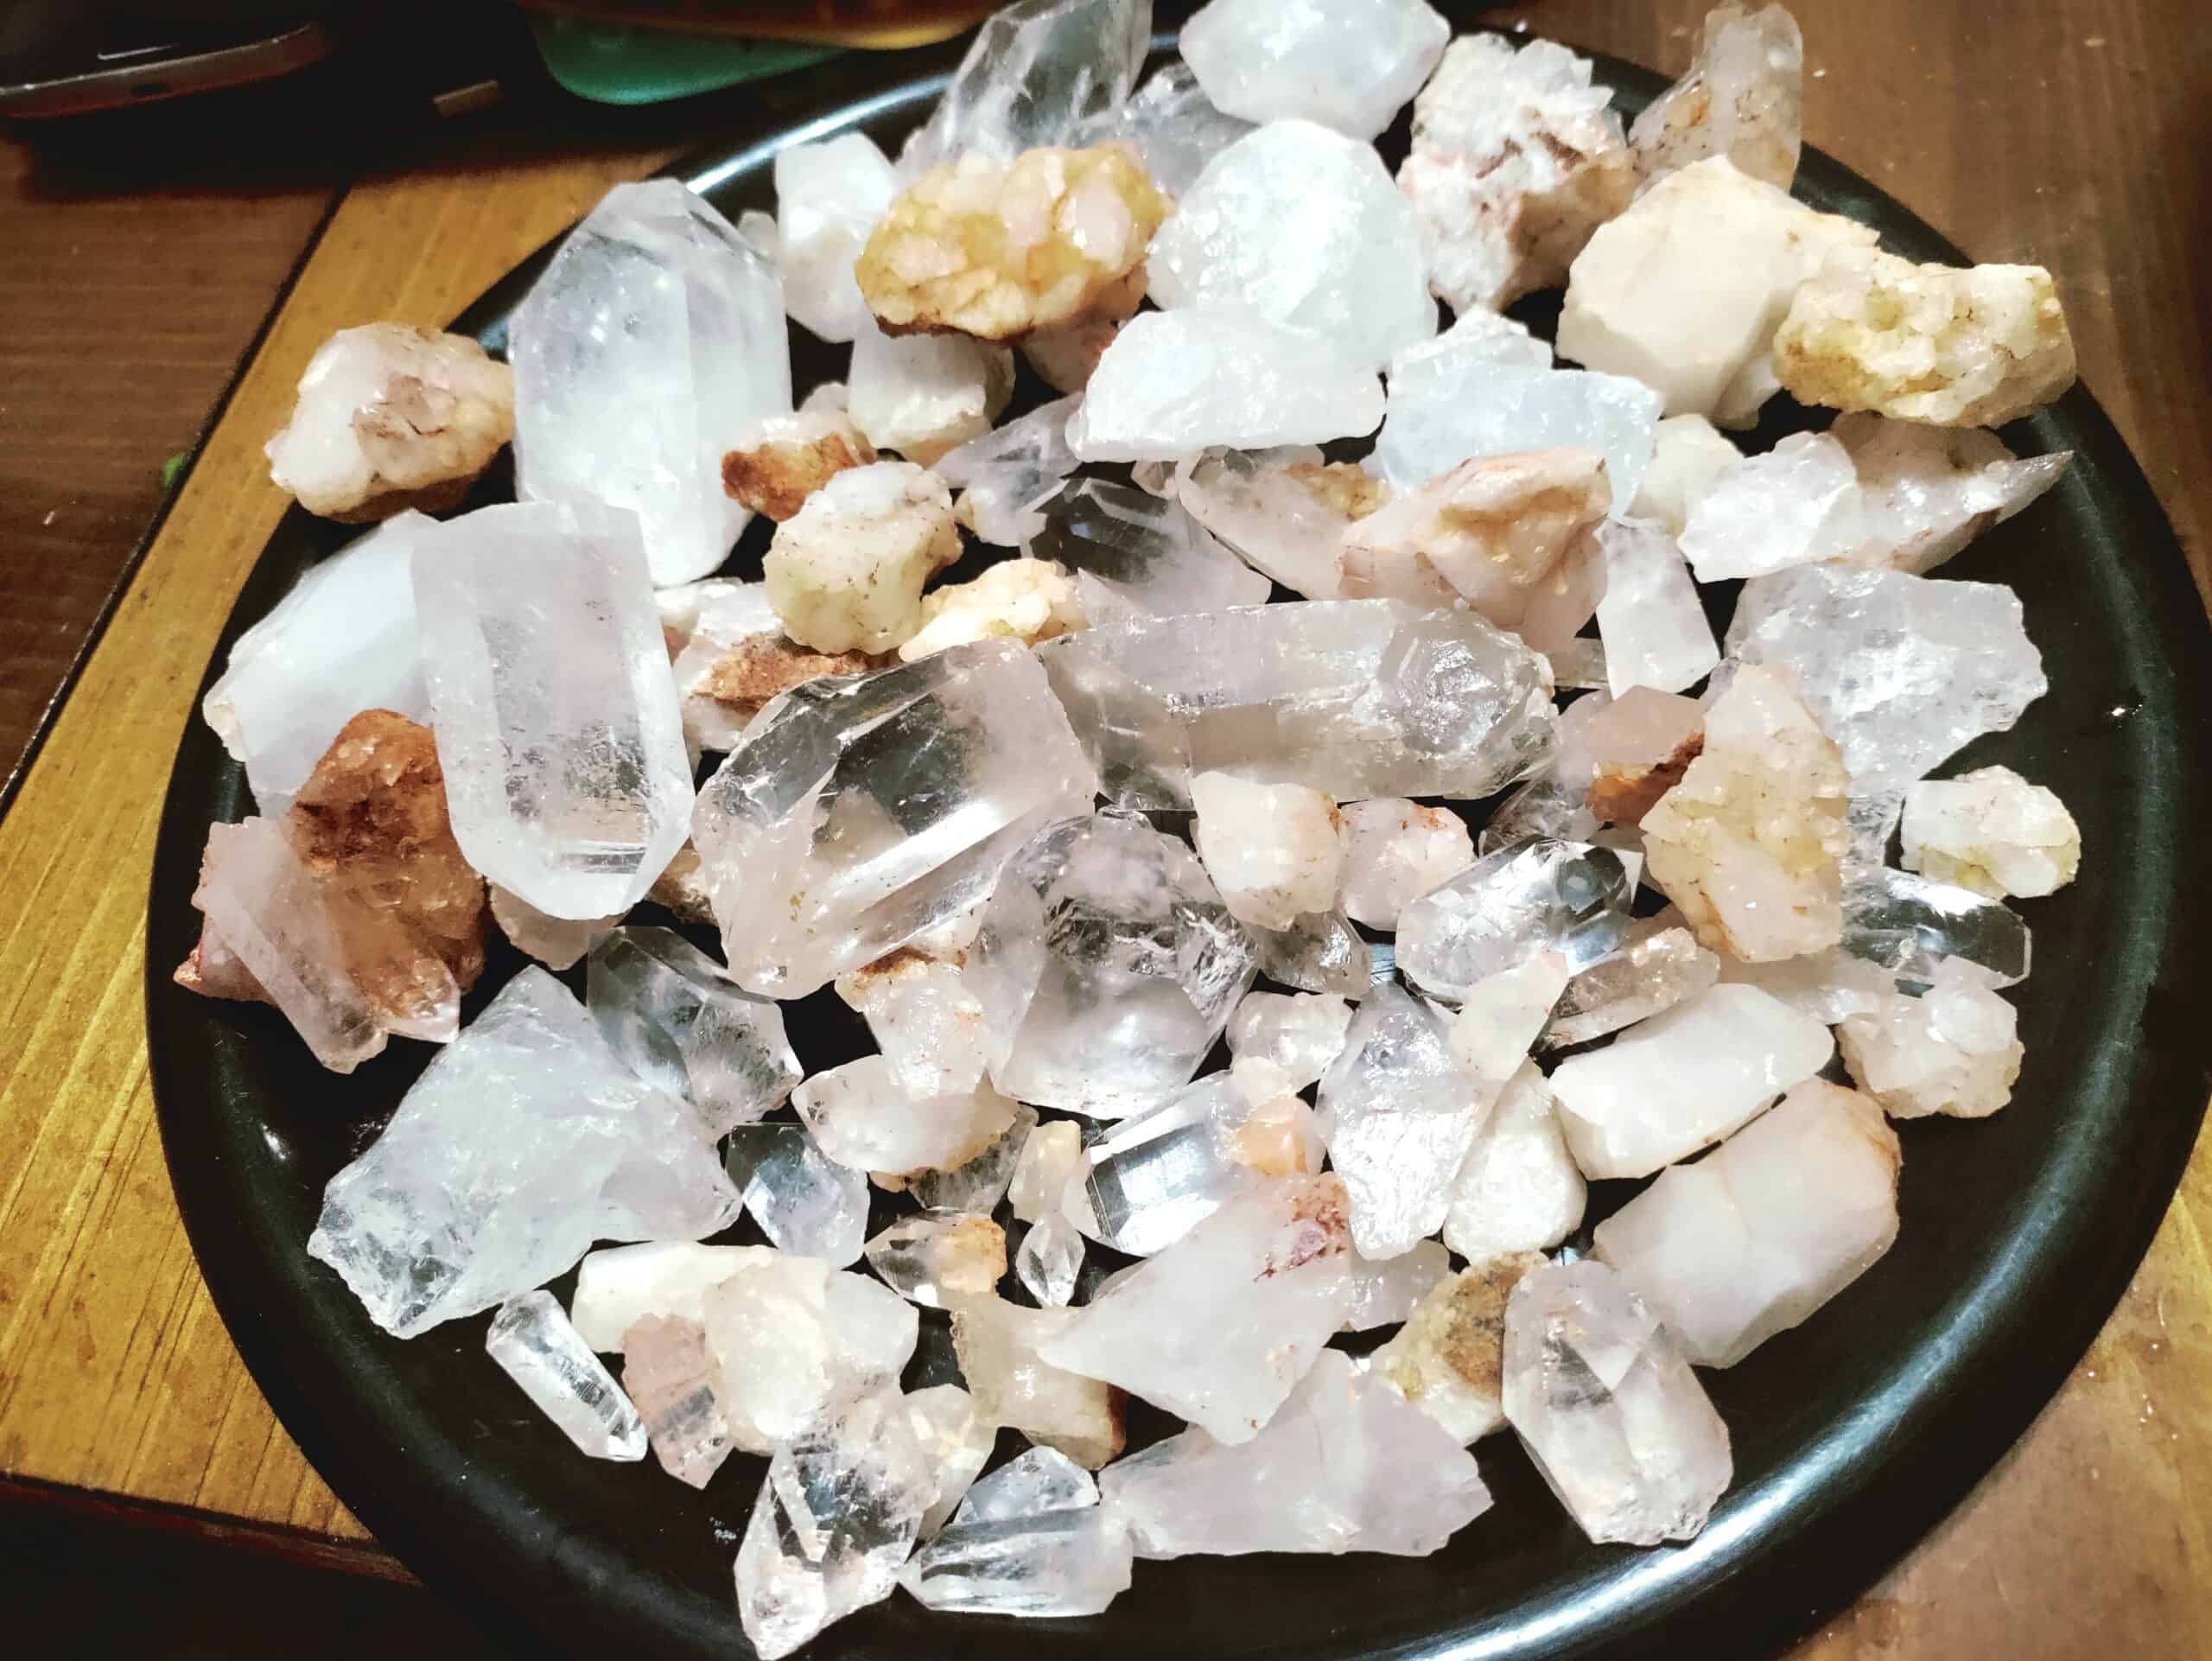 crystals from the quartz mines in arkansas